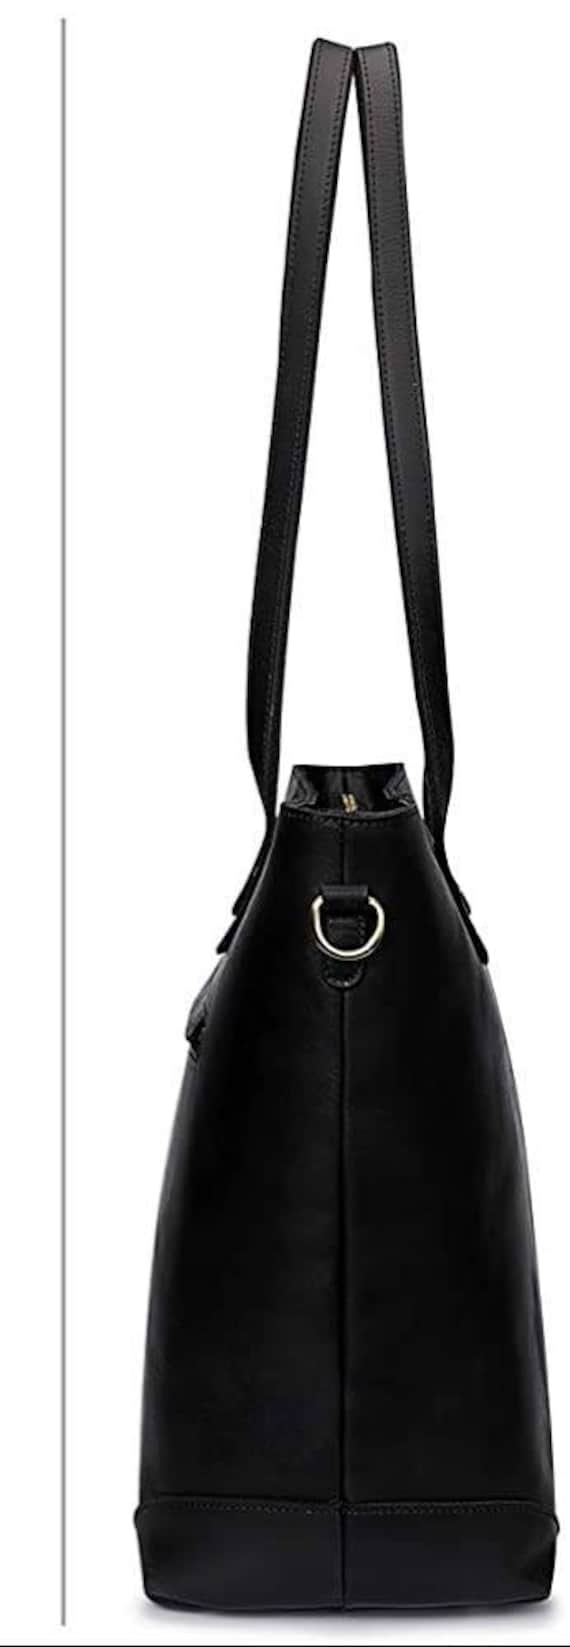 comfortable and fancy ladies purse in| Alibaba.com